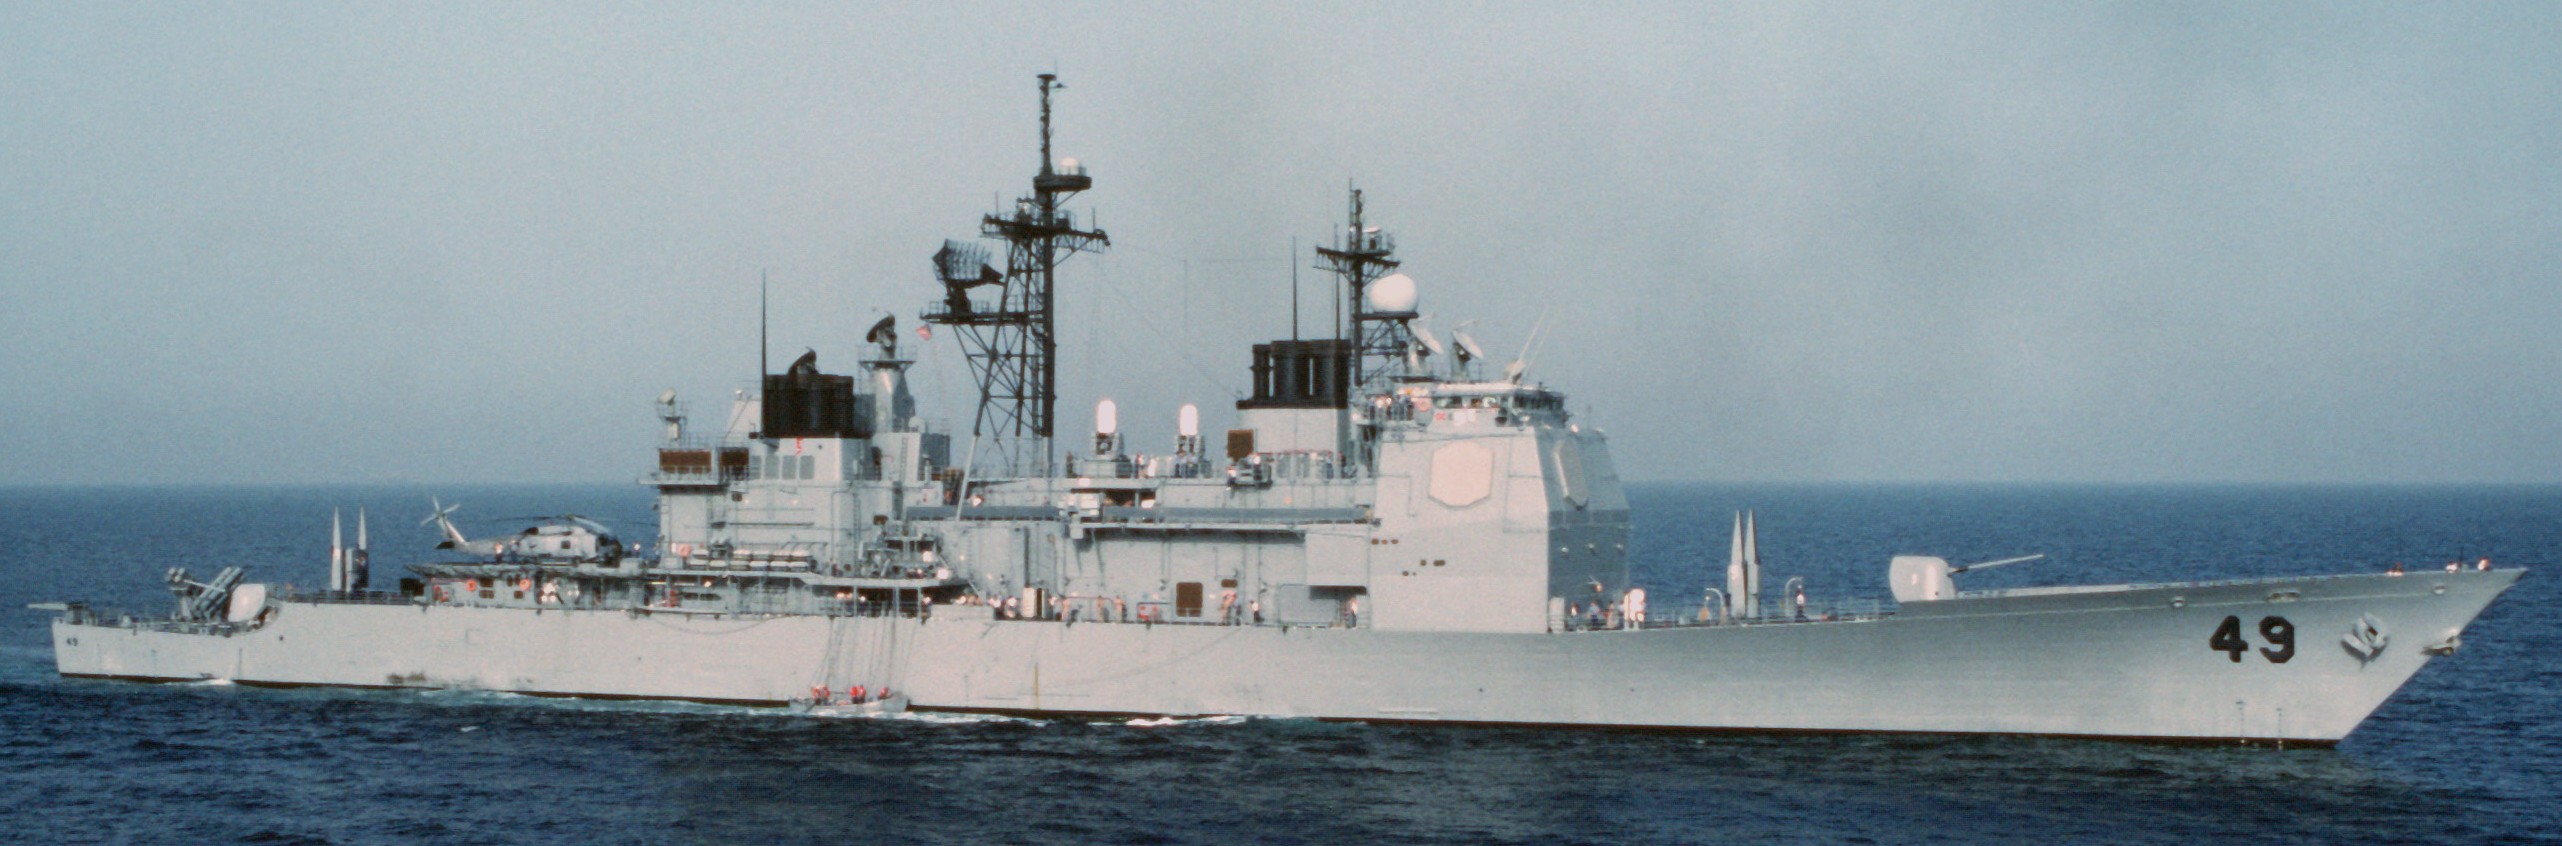 cg-49 uss vincennes ticonderoga class guided missile cruiser aegis us navy persian gulf 1988